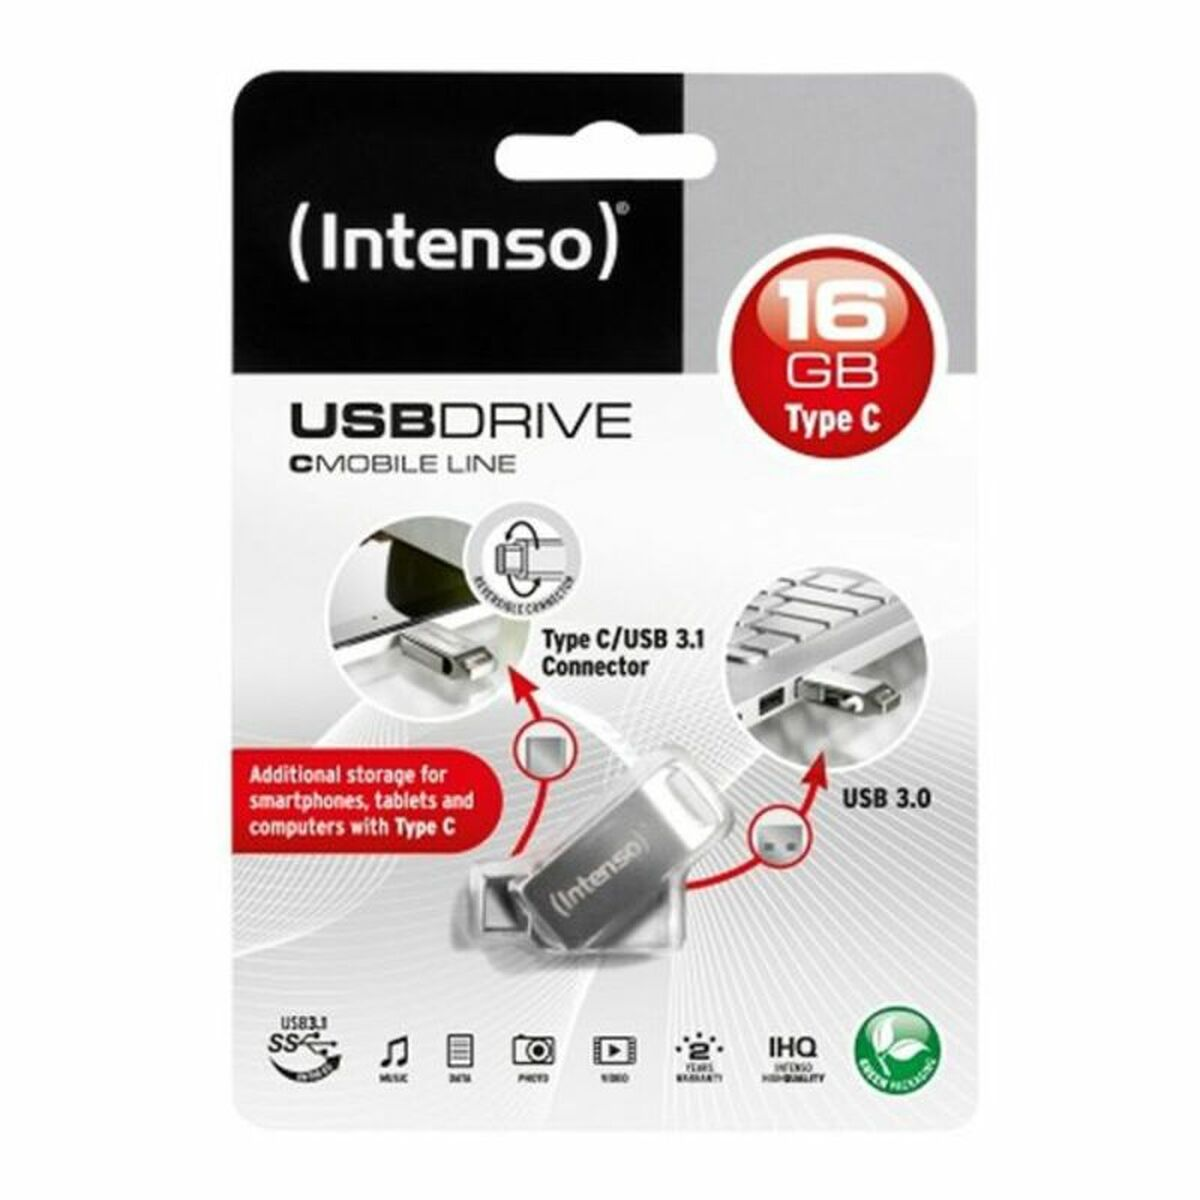 INTENSO 3536470 16GB CMOBILE 16 LINE GB) USB-Stick (Silber